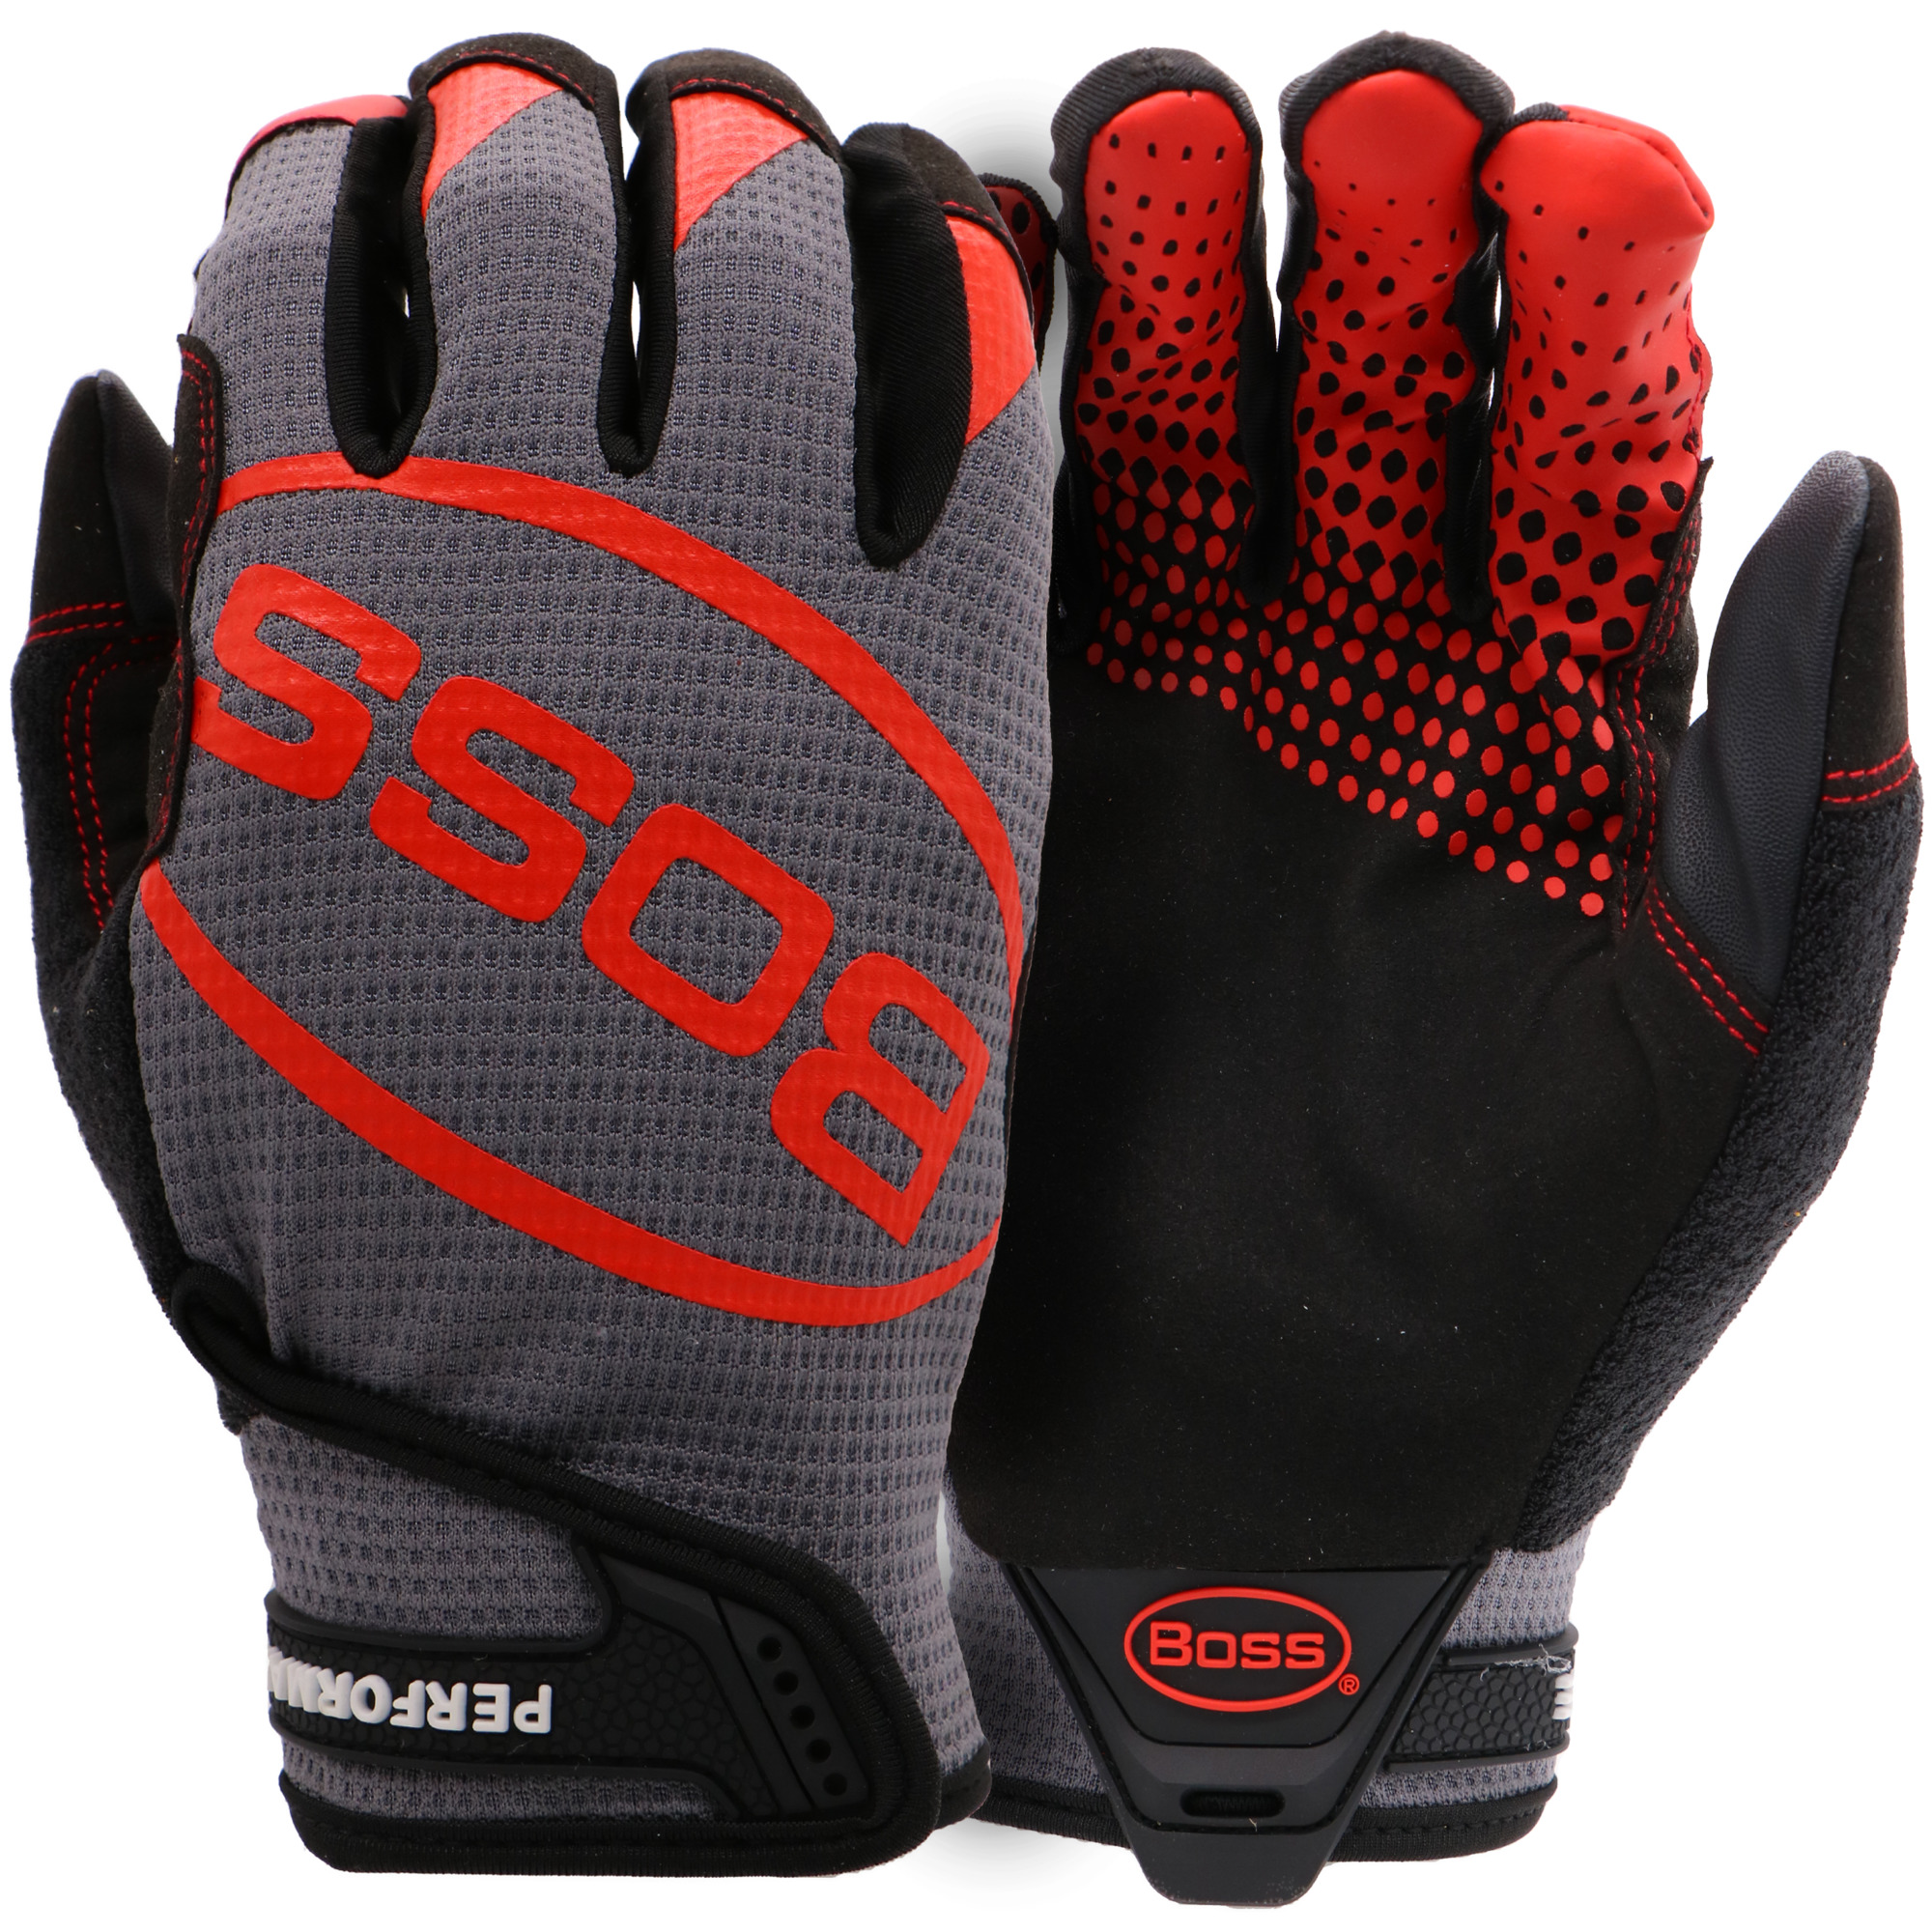 Boss, Hi-Preformance Grip Glove, Size M, Color Gray, Included (qty.) 1 Model B52101-M